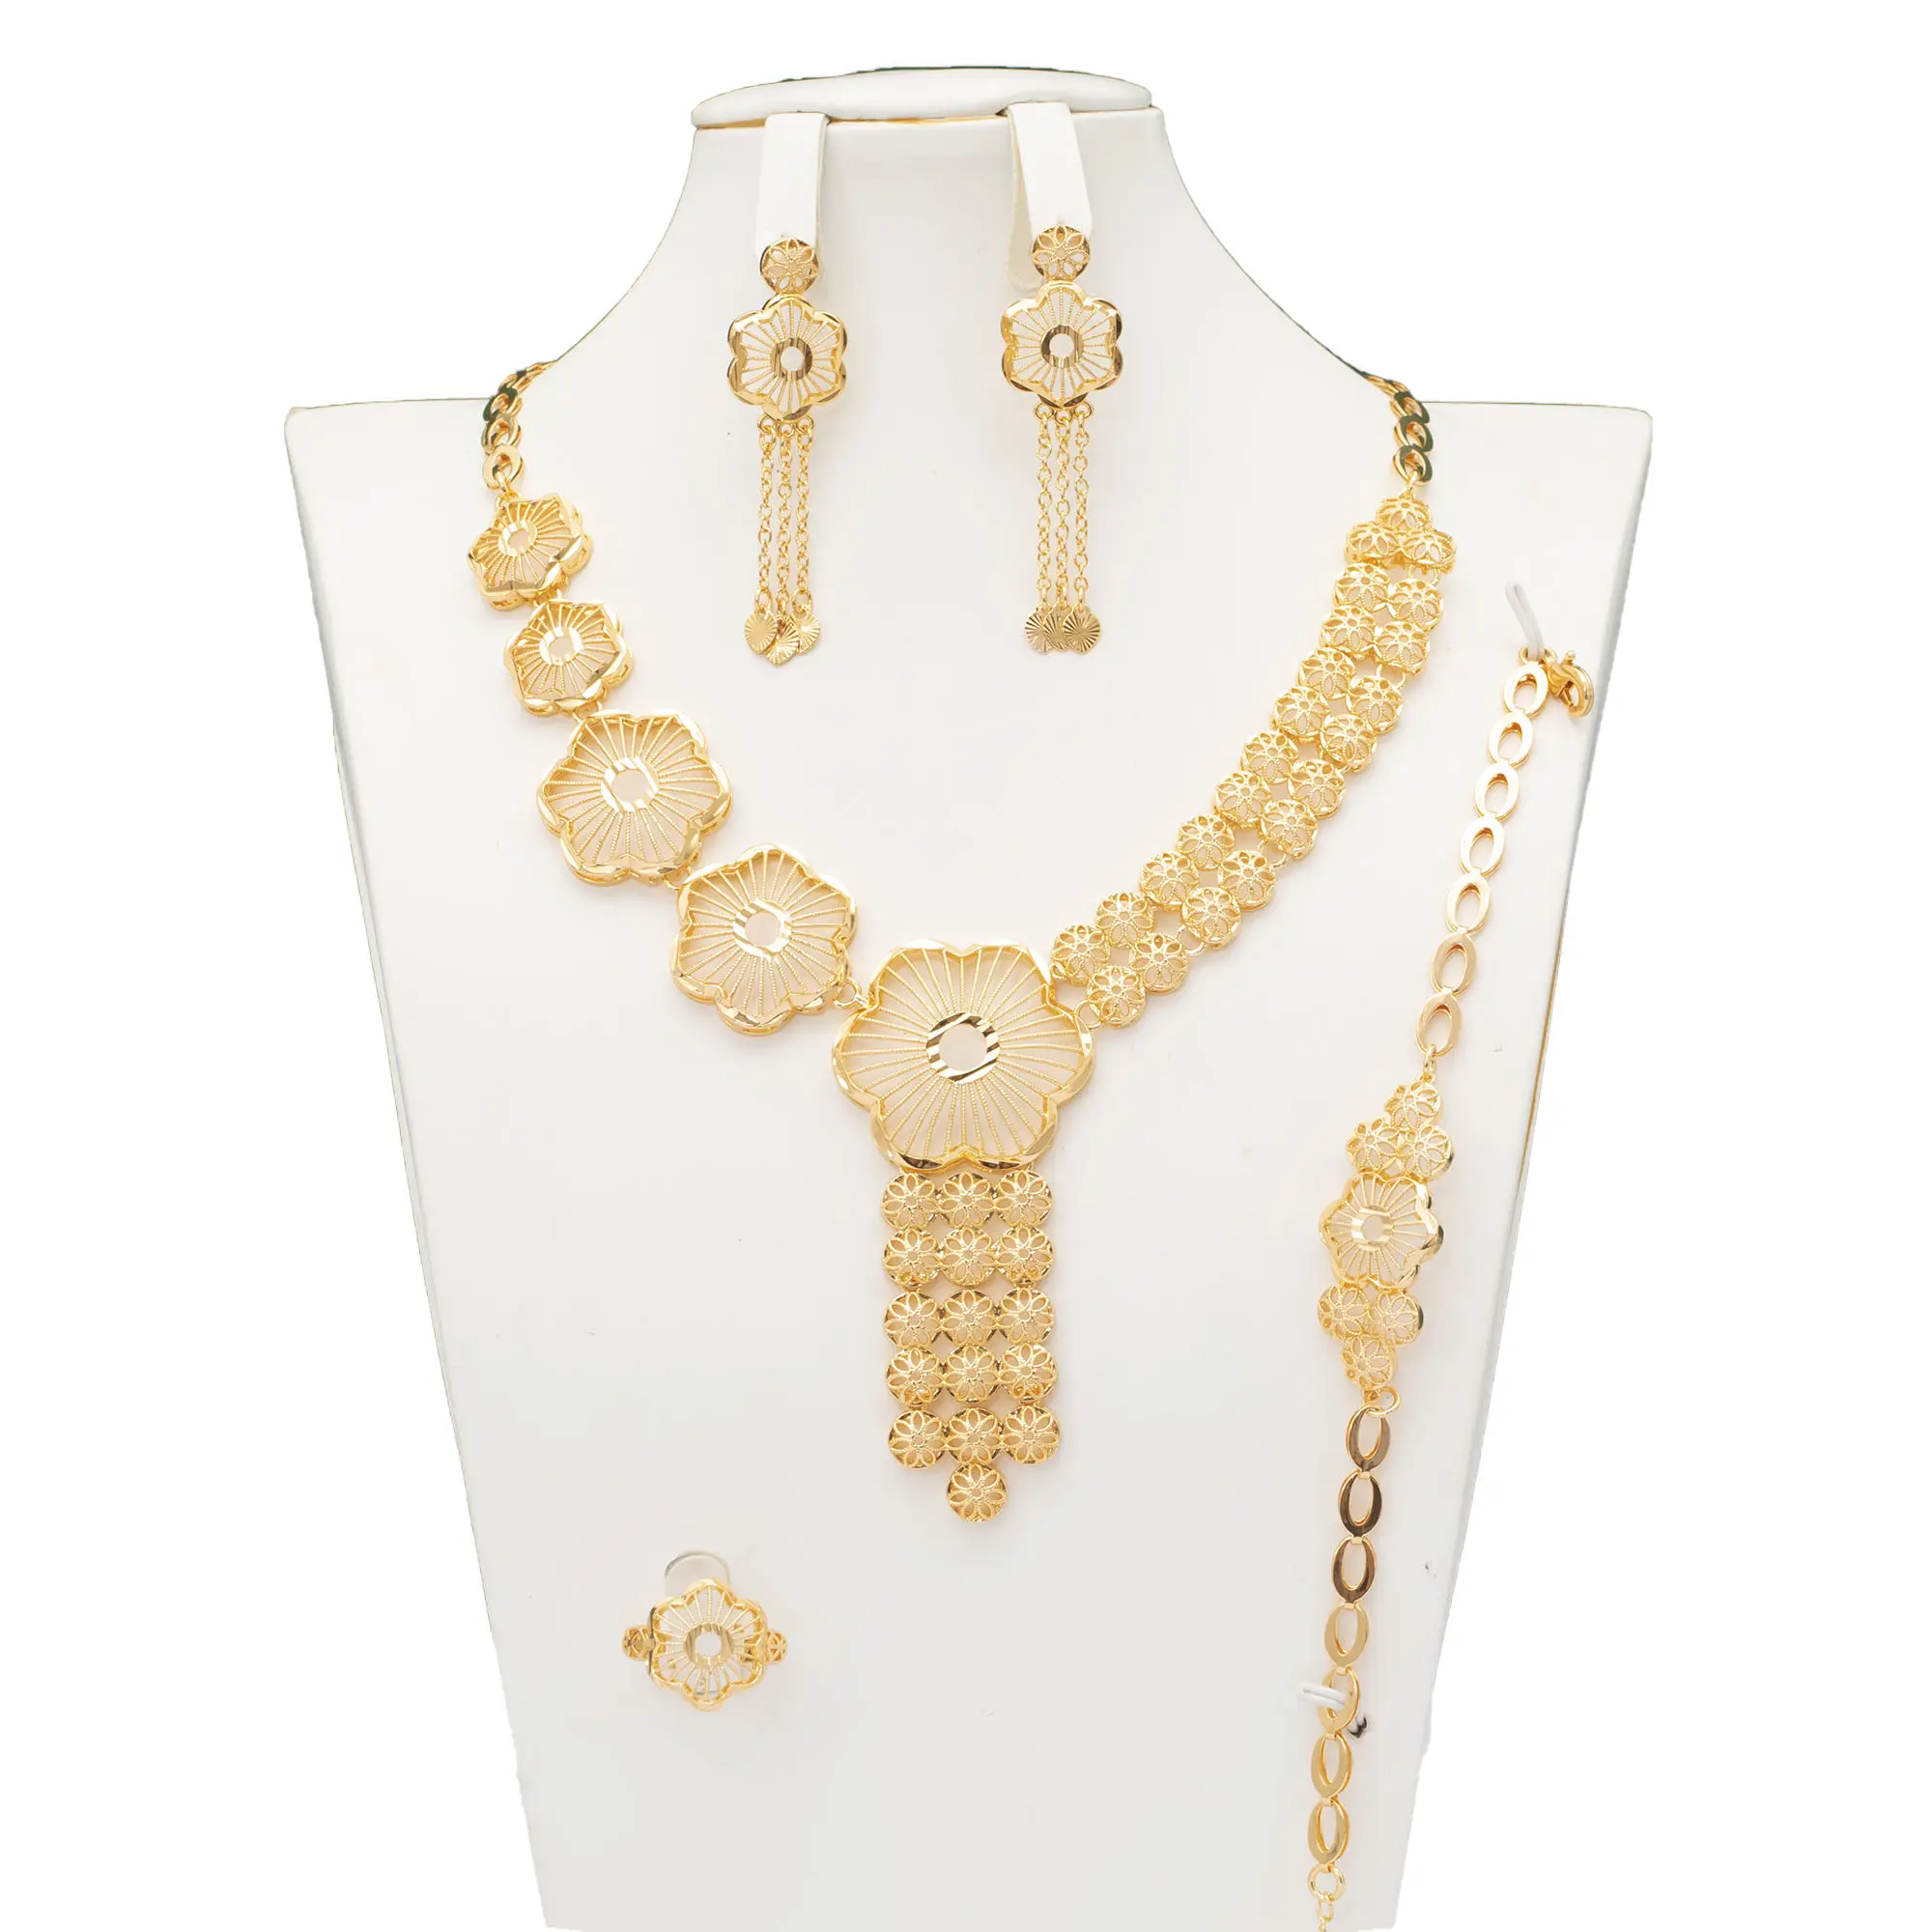 Neueste Fashion Factory Großhandel Blumen Schmuck Sets 24 Karat vergoldet Dubai Romantic Jewelry Set